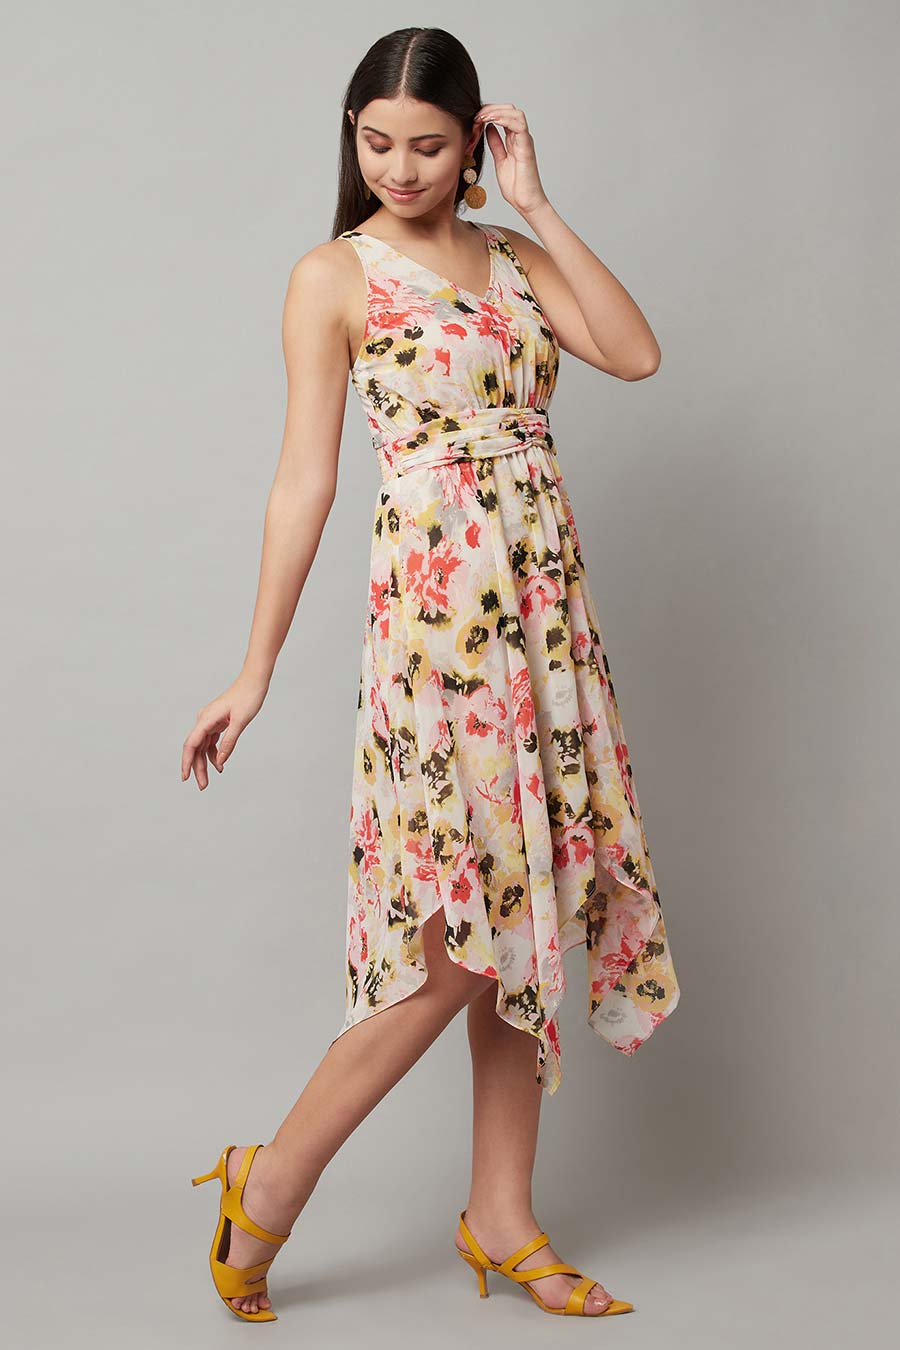 Beige Floral Print Dress